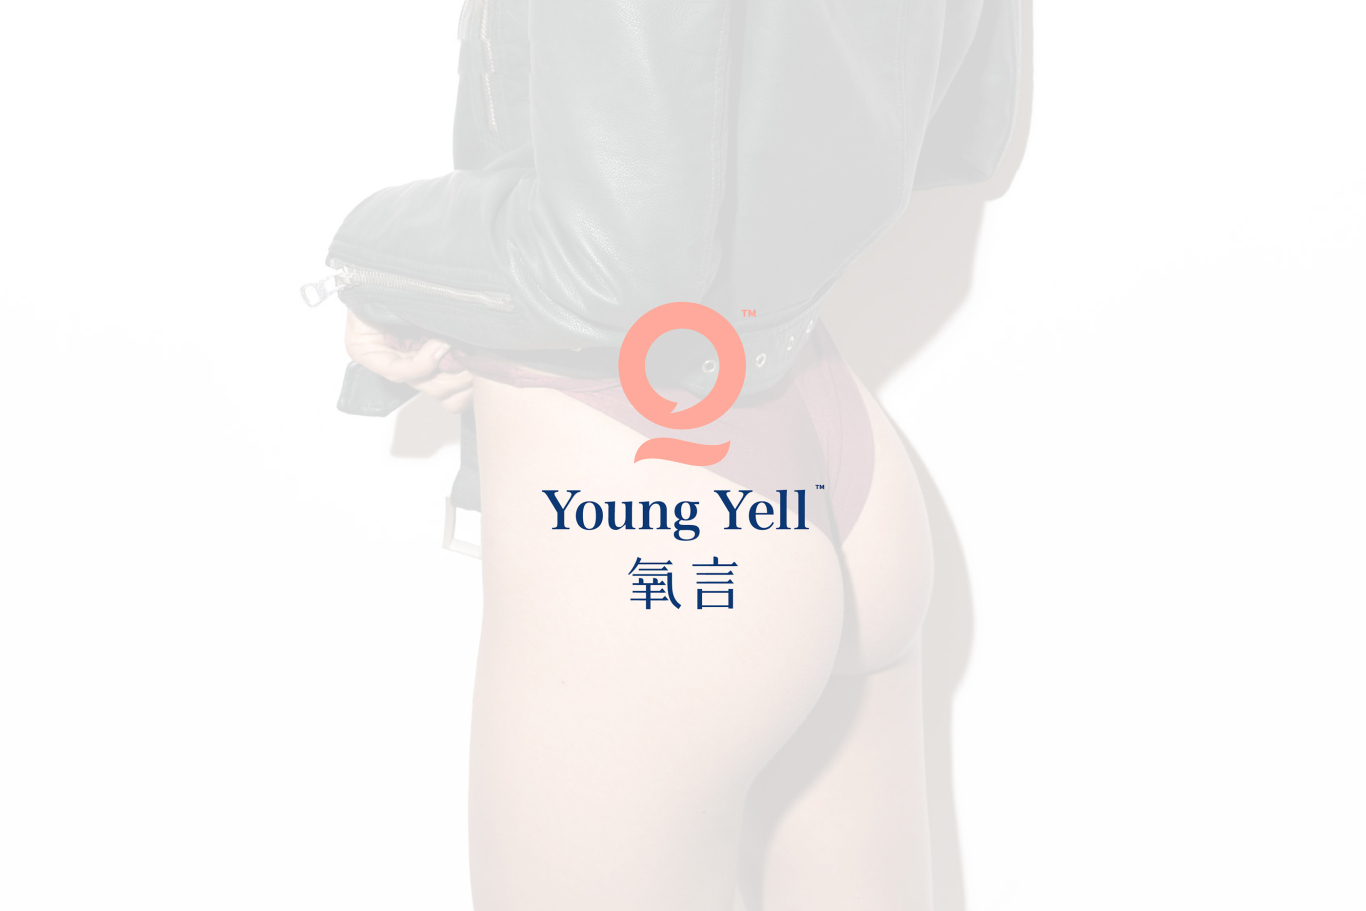 氧言品牌VI設計 Young Yell Brand VI Design | 高端內衣服裝行業LOGO設計圖0